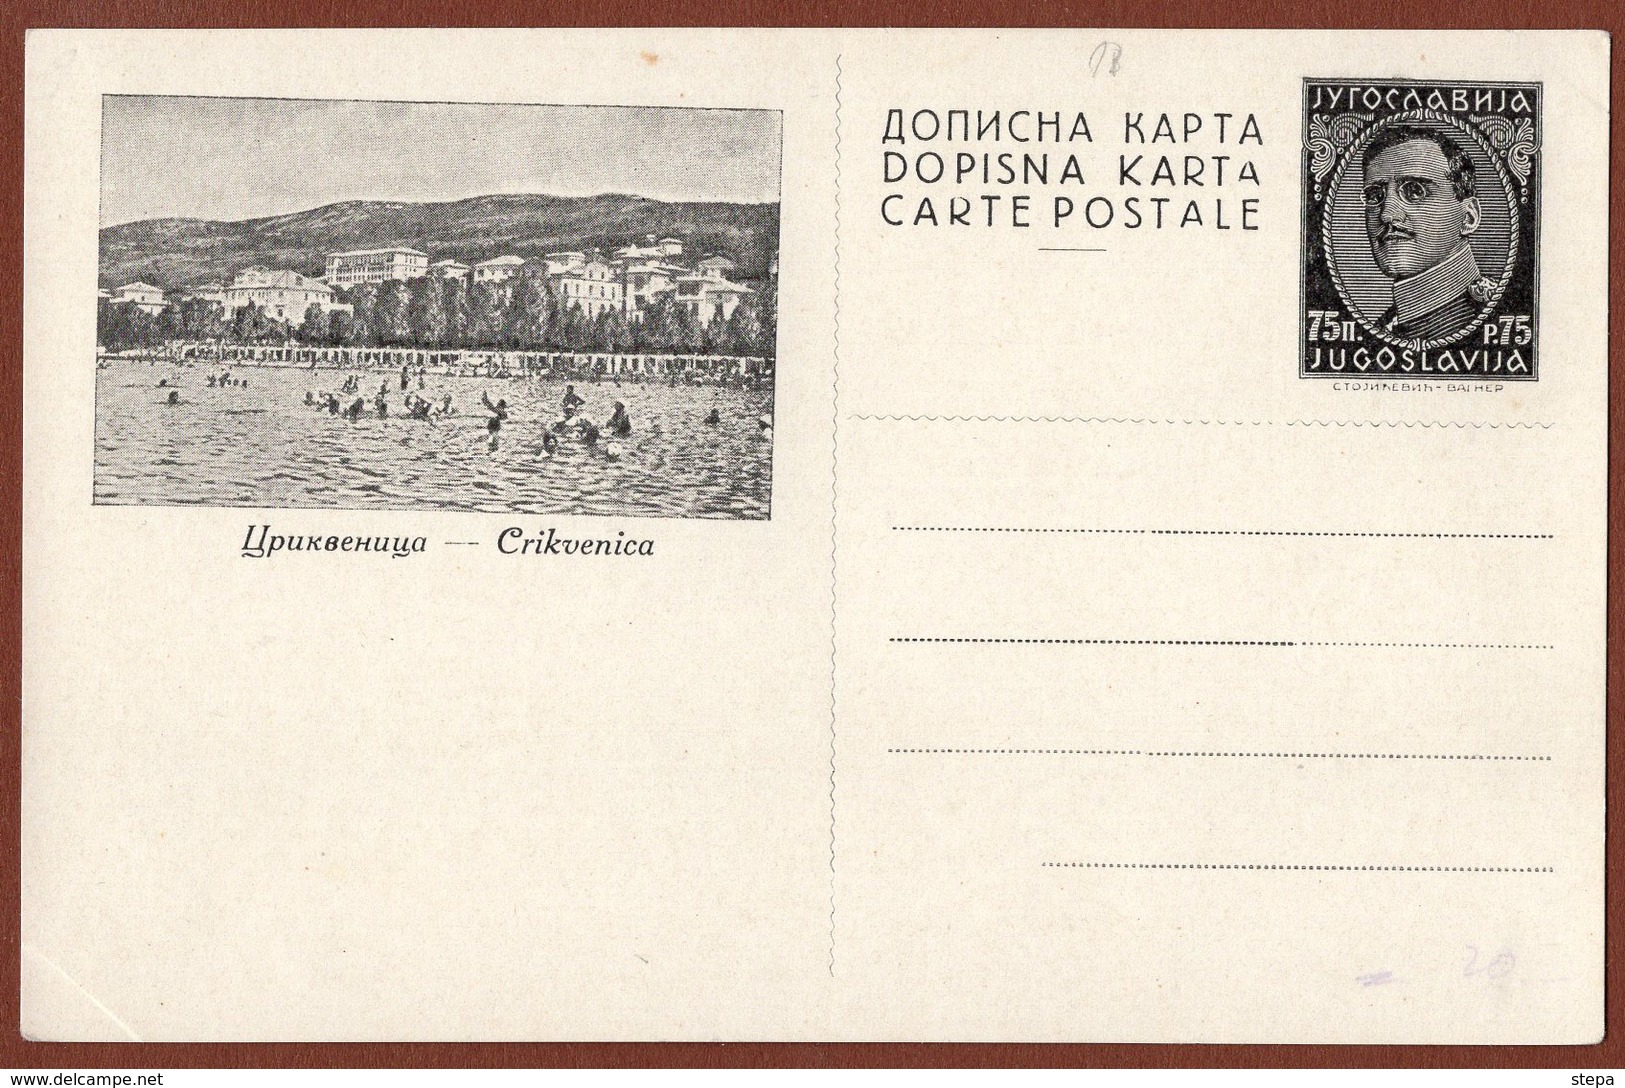 YUGOSLAVIA-CROATIA, CRIKVENICA, 2nd EDITION ILLUSTRATED POSTAL CARD RRR!!! - Enteros Postales